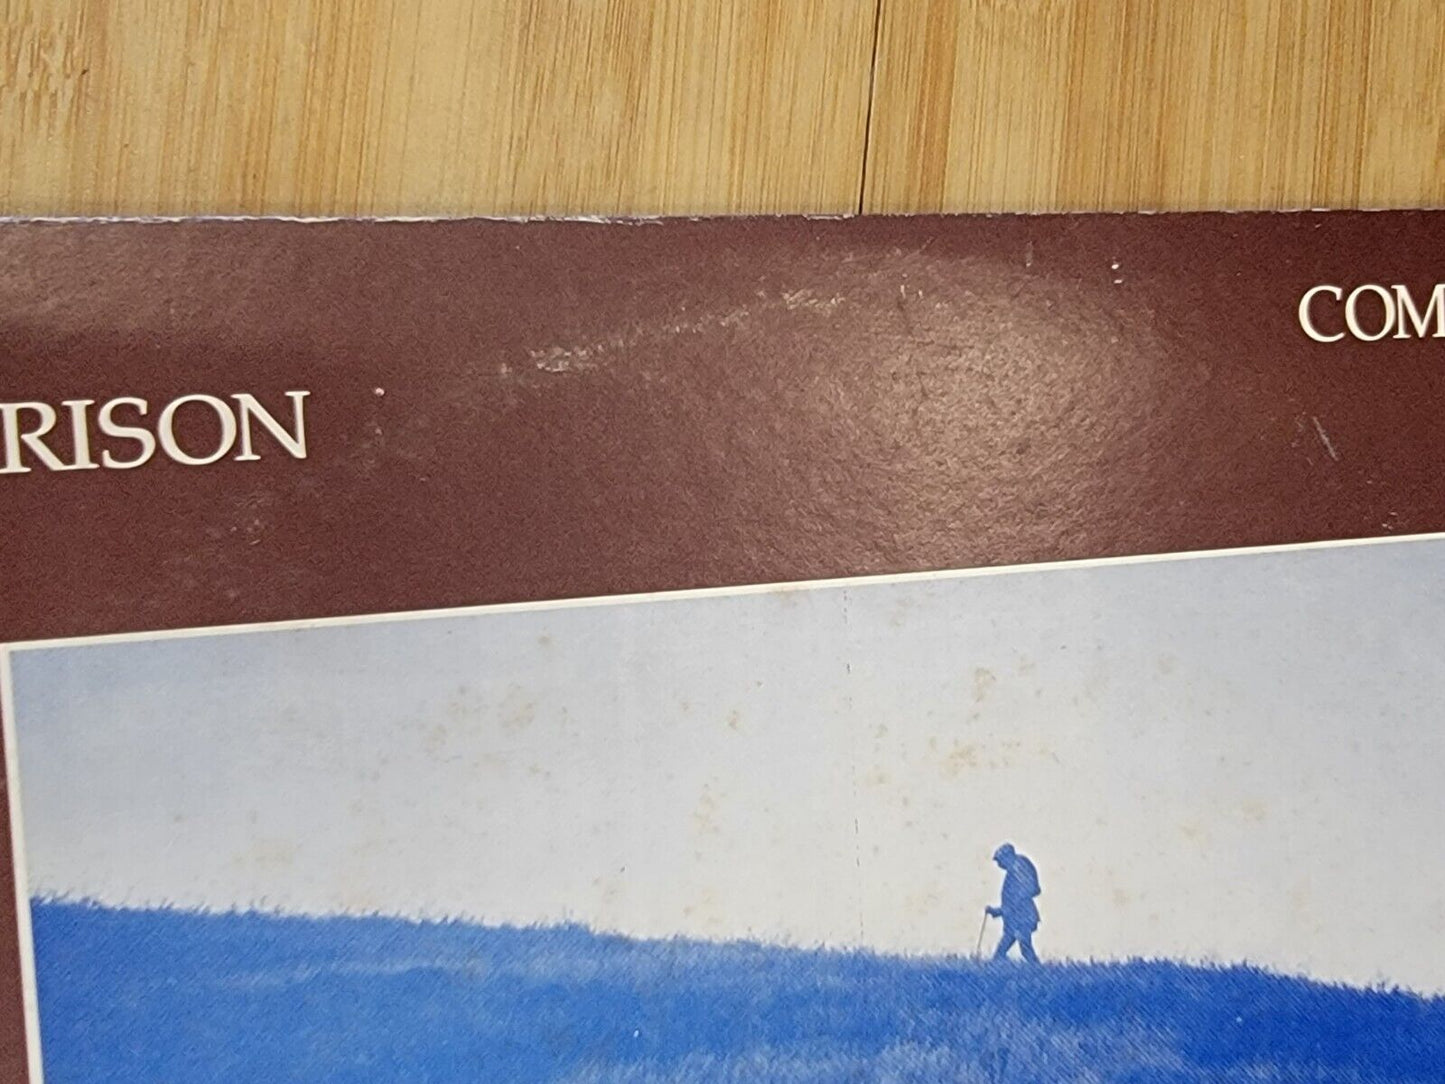 Van Morrison "Common One" Taiwan Pressing Record Album With Lyric Sheet